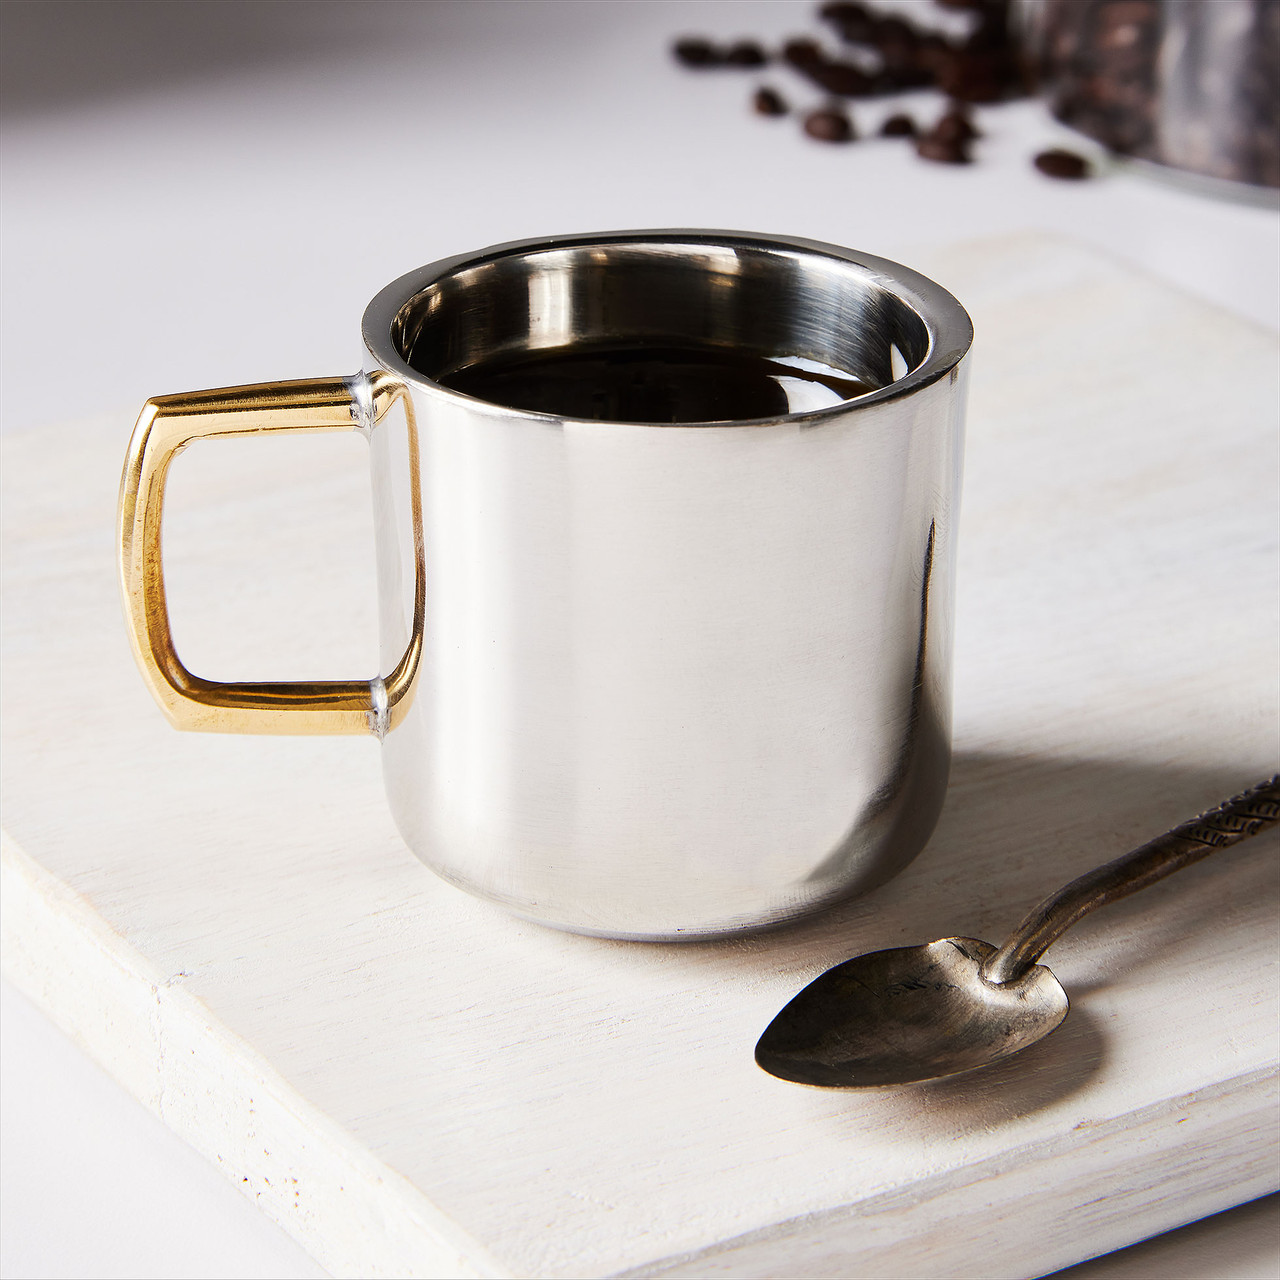 Coffee and Espresso Cups